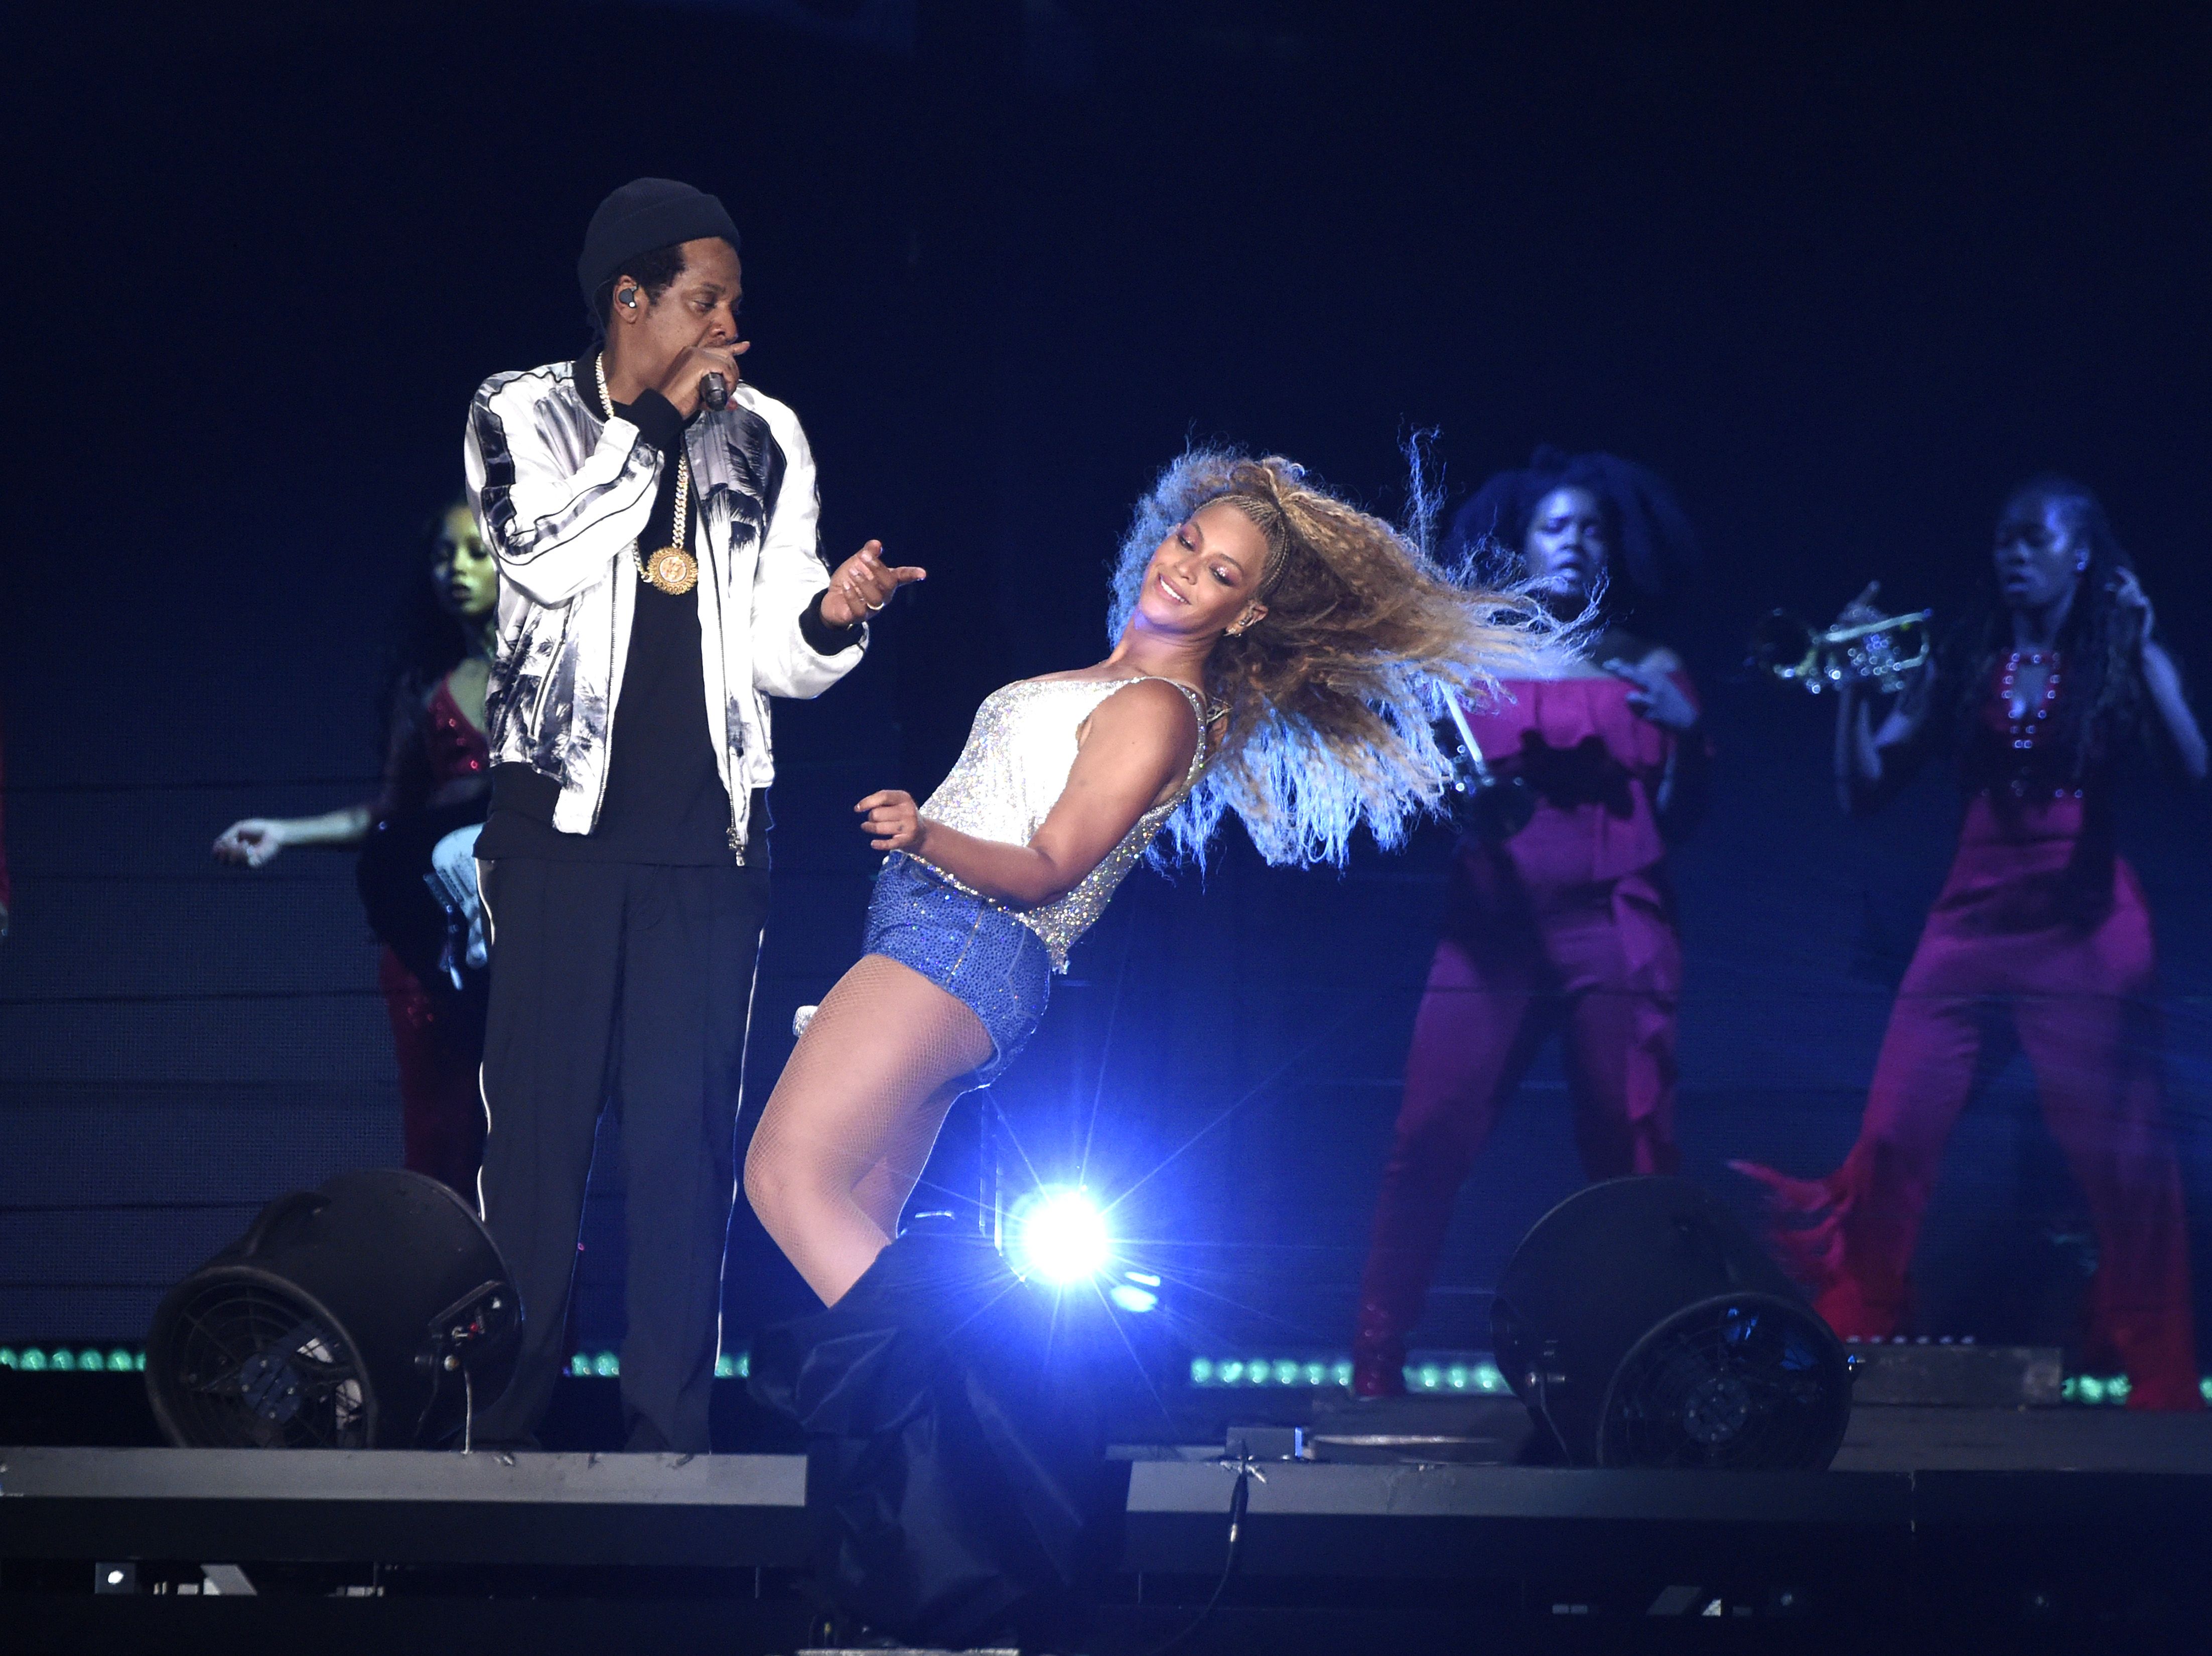 Beyoncé Rushed by a Crazed Fan at Her Concert - Beyoncé's Backup Dancers Tackle Fan